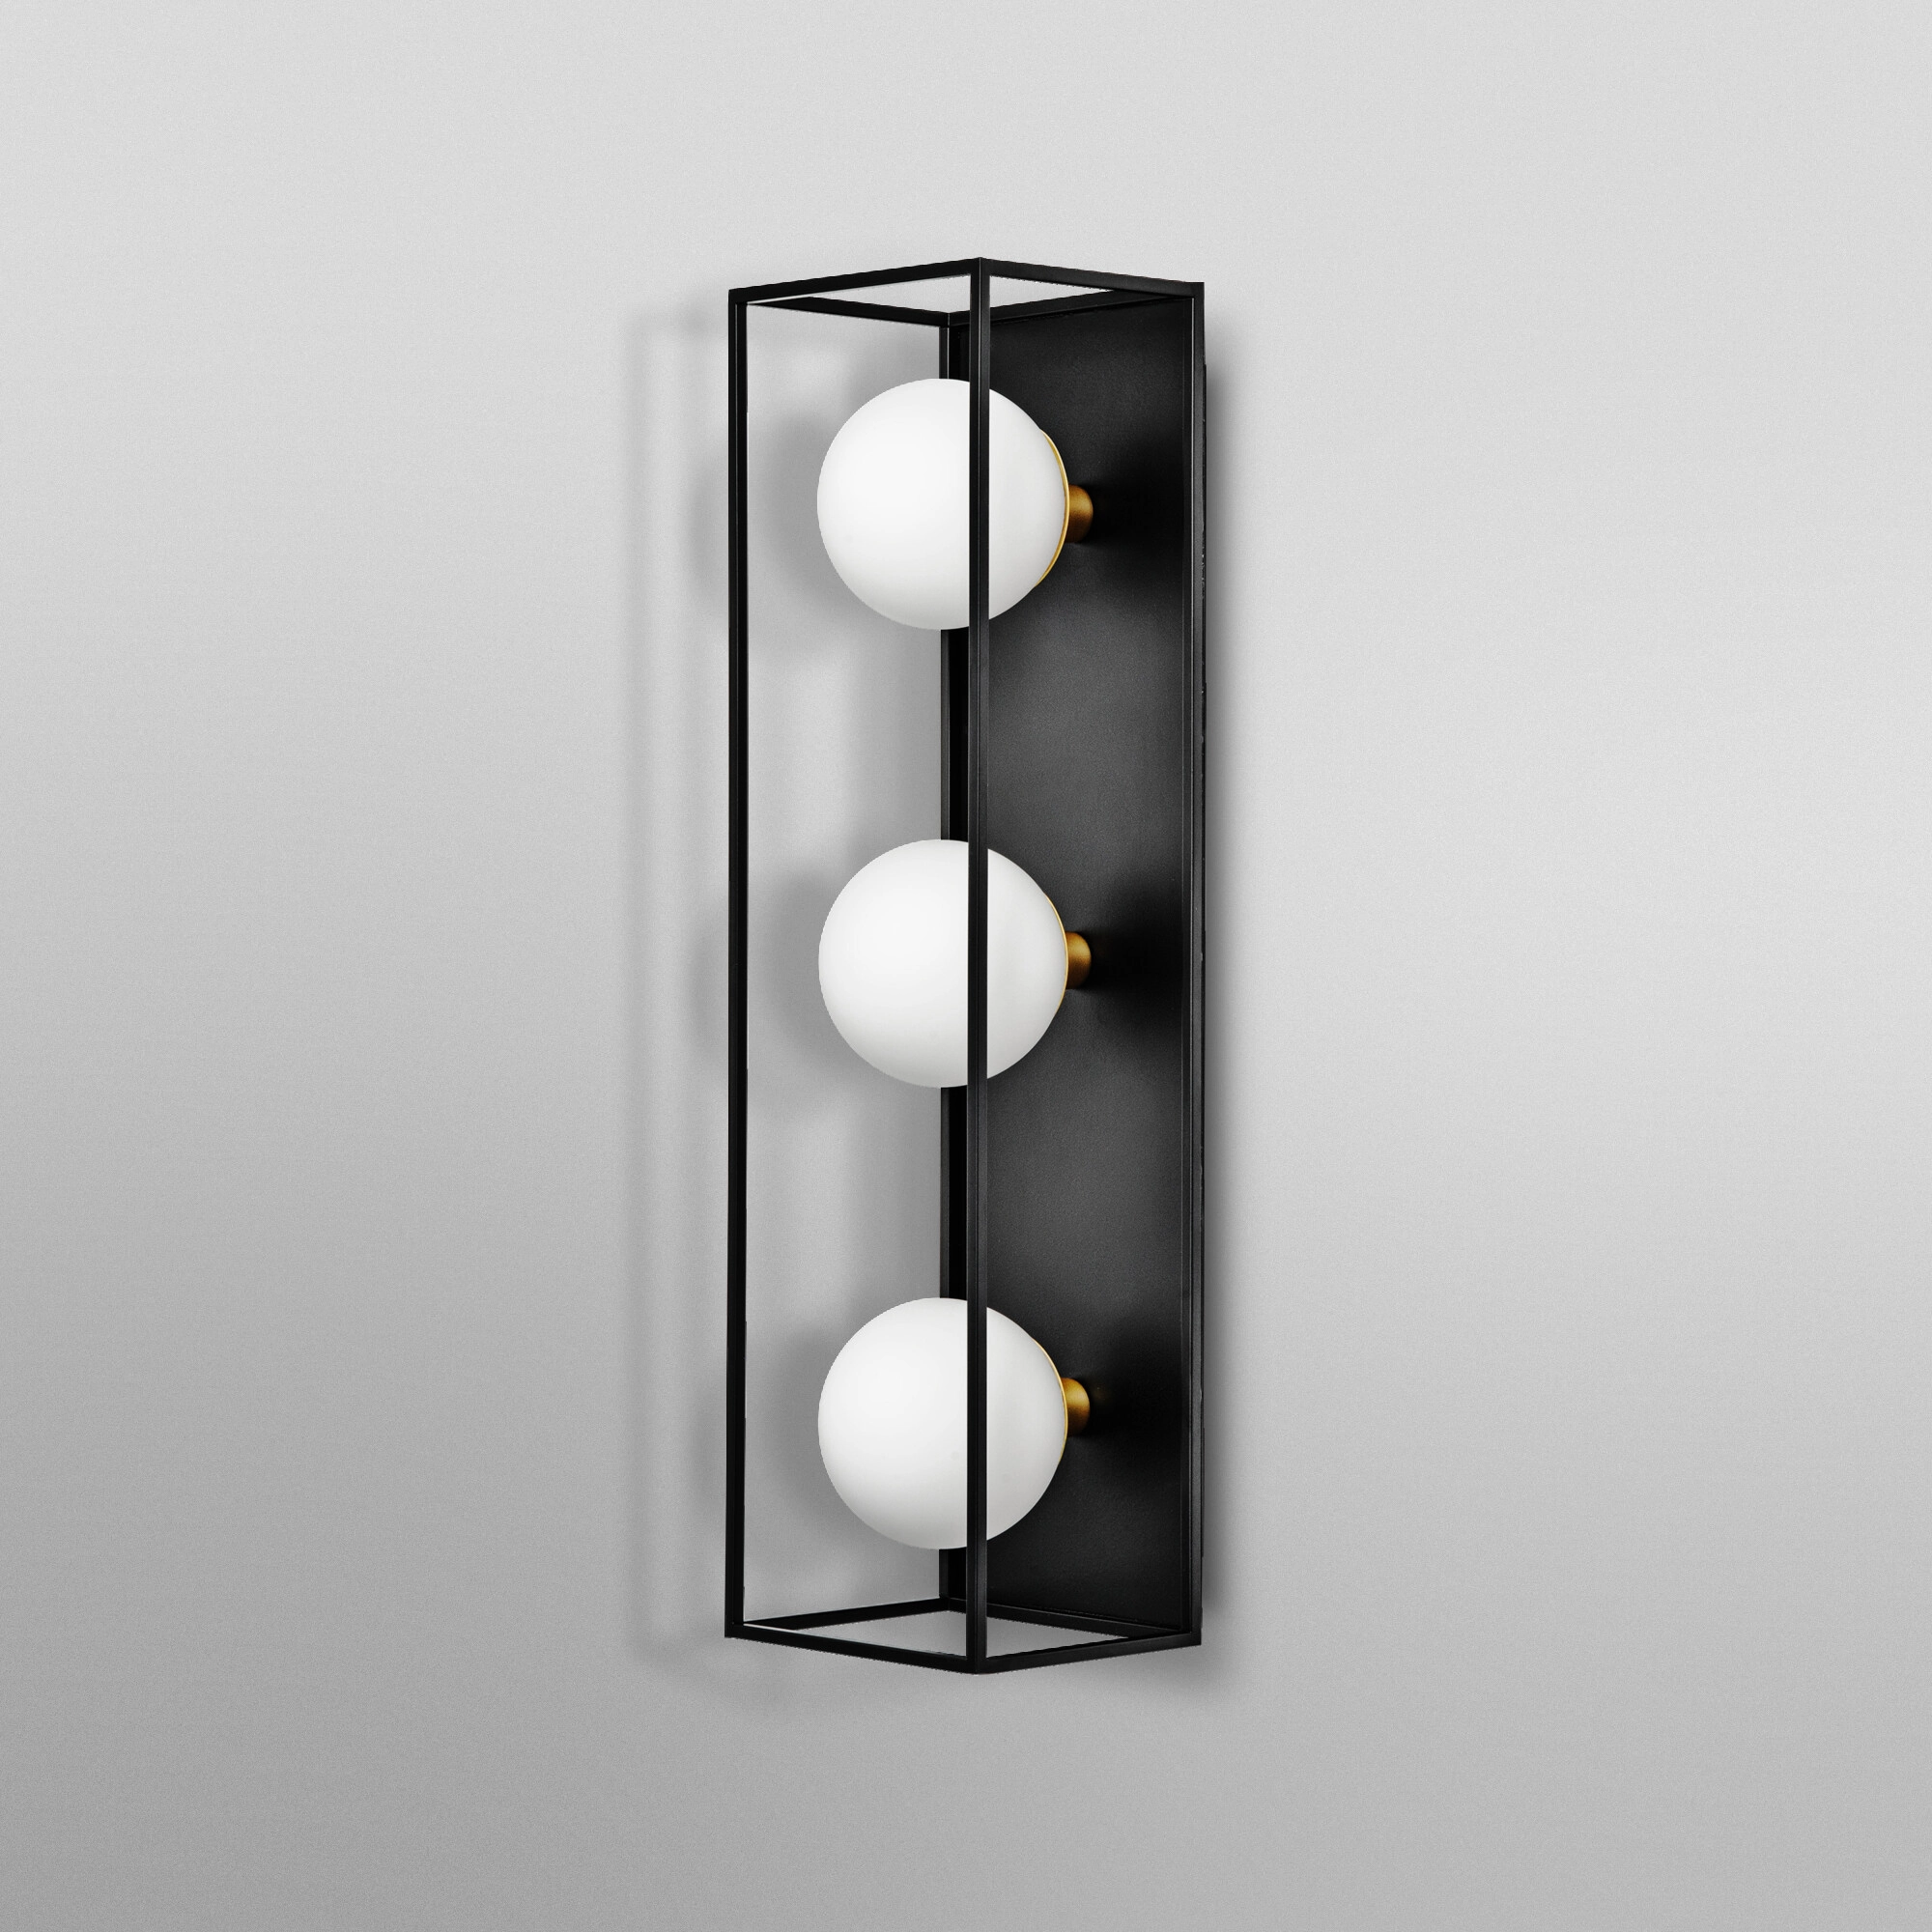 Dekorative LED-Wandleuchte, OMG-Schriftzug, Bunt, 45 cm x 20 cm